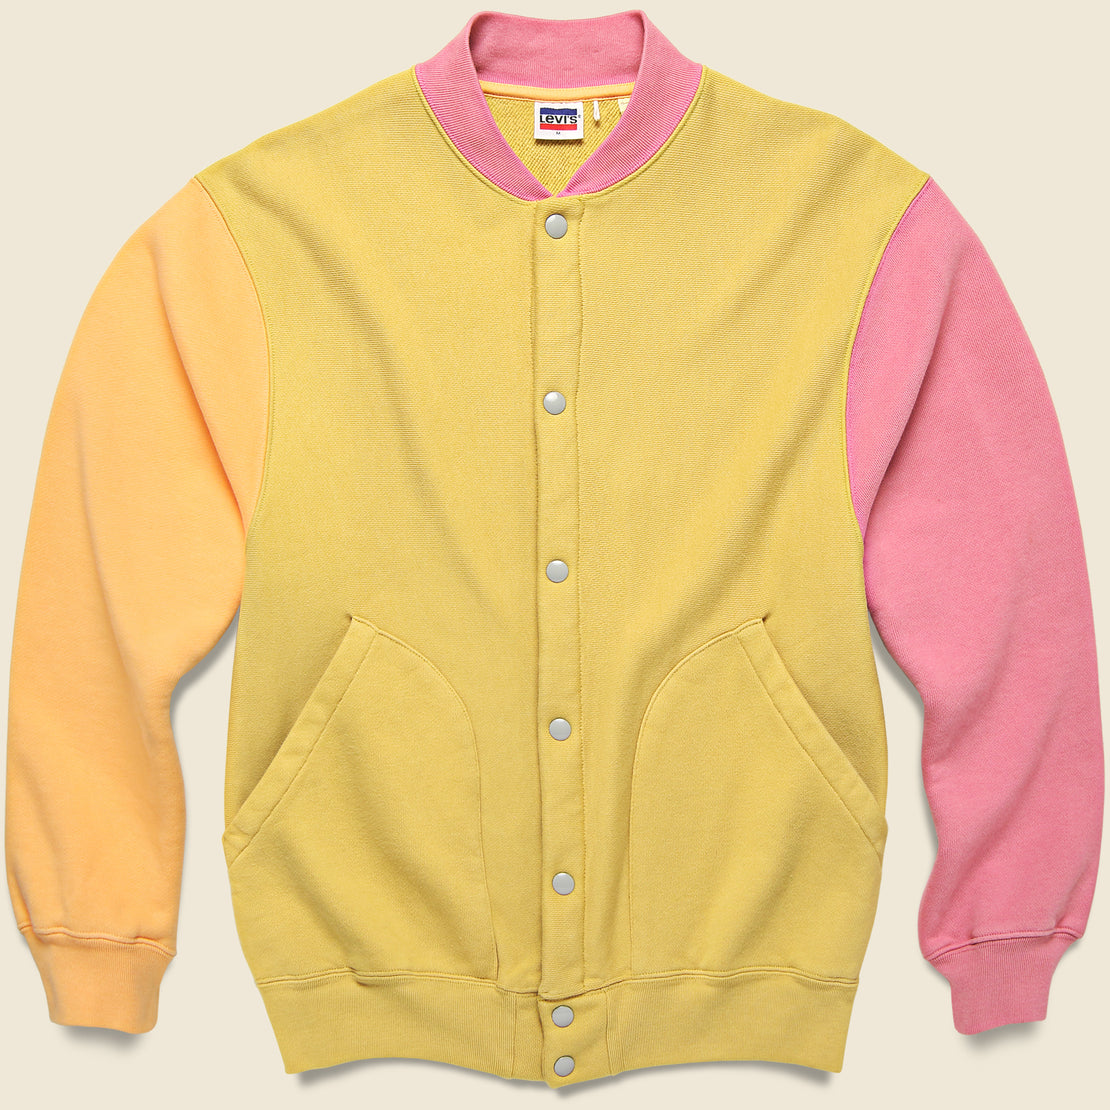 Levis Vintage Clothing Fleece Cardigan - Lemon/Orange/Pink/Tan